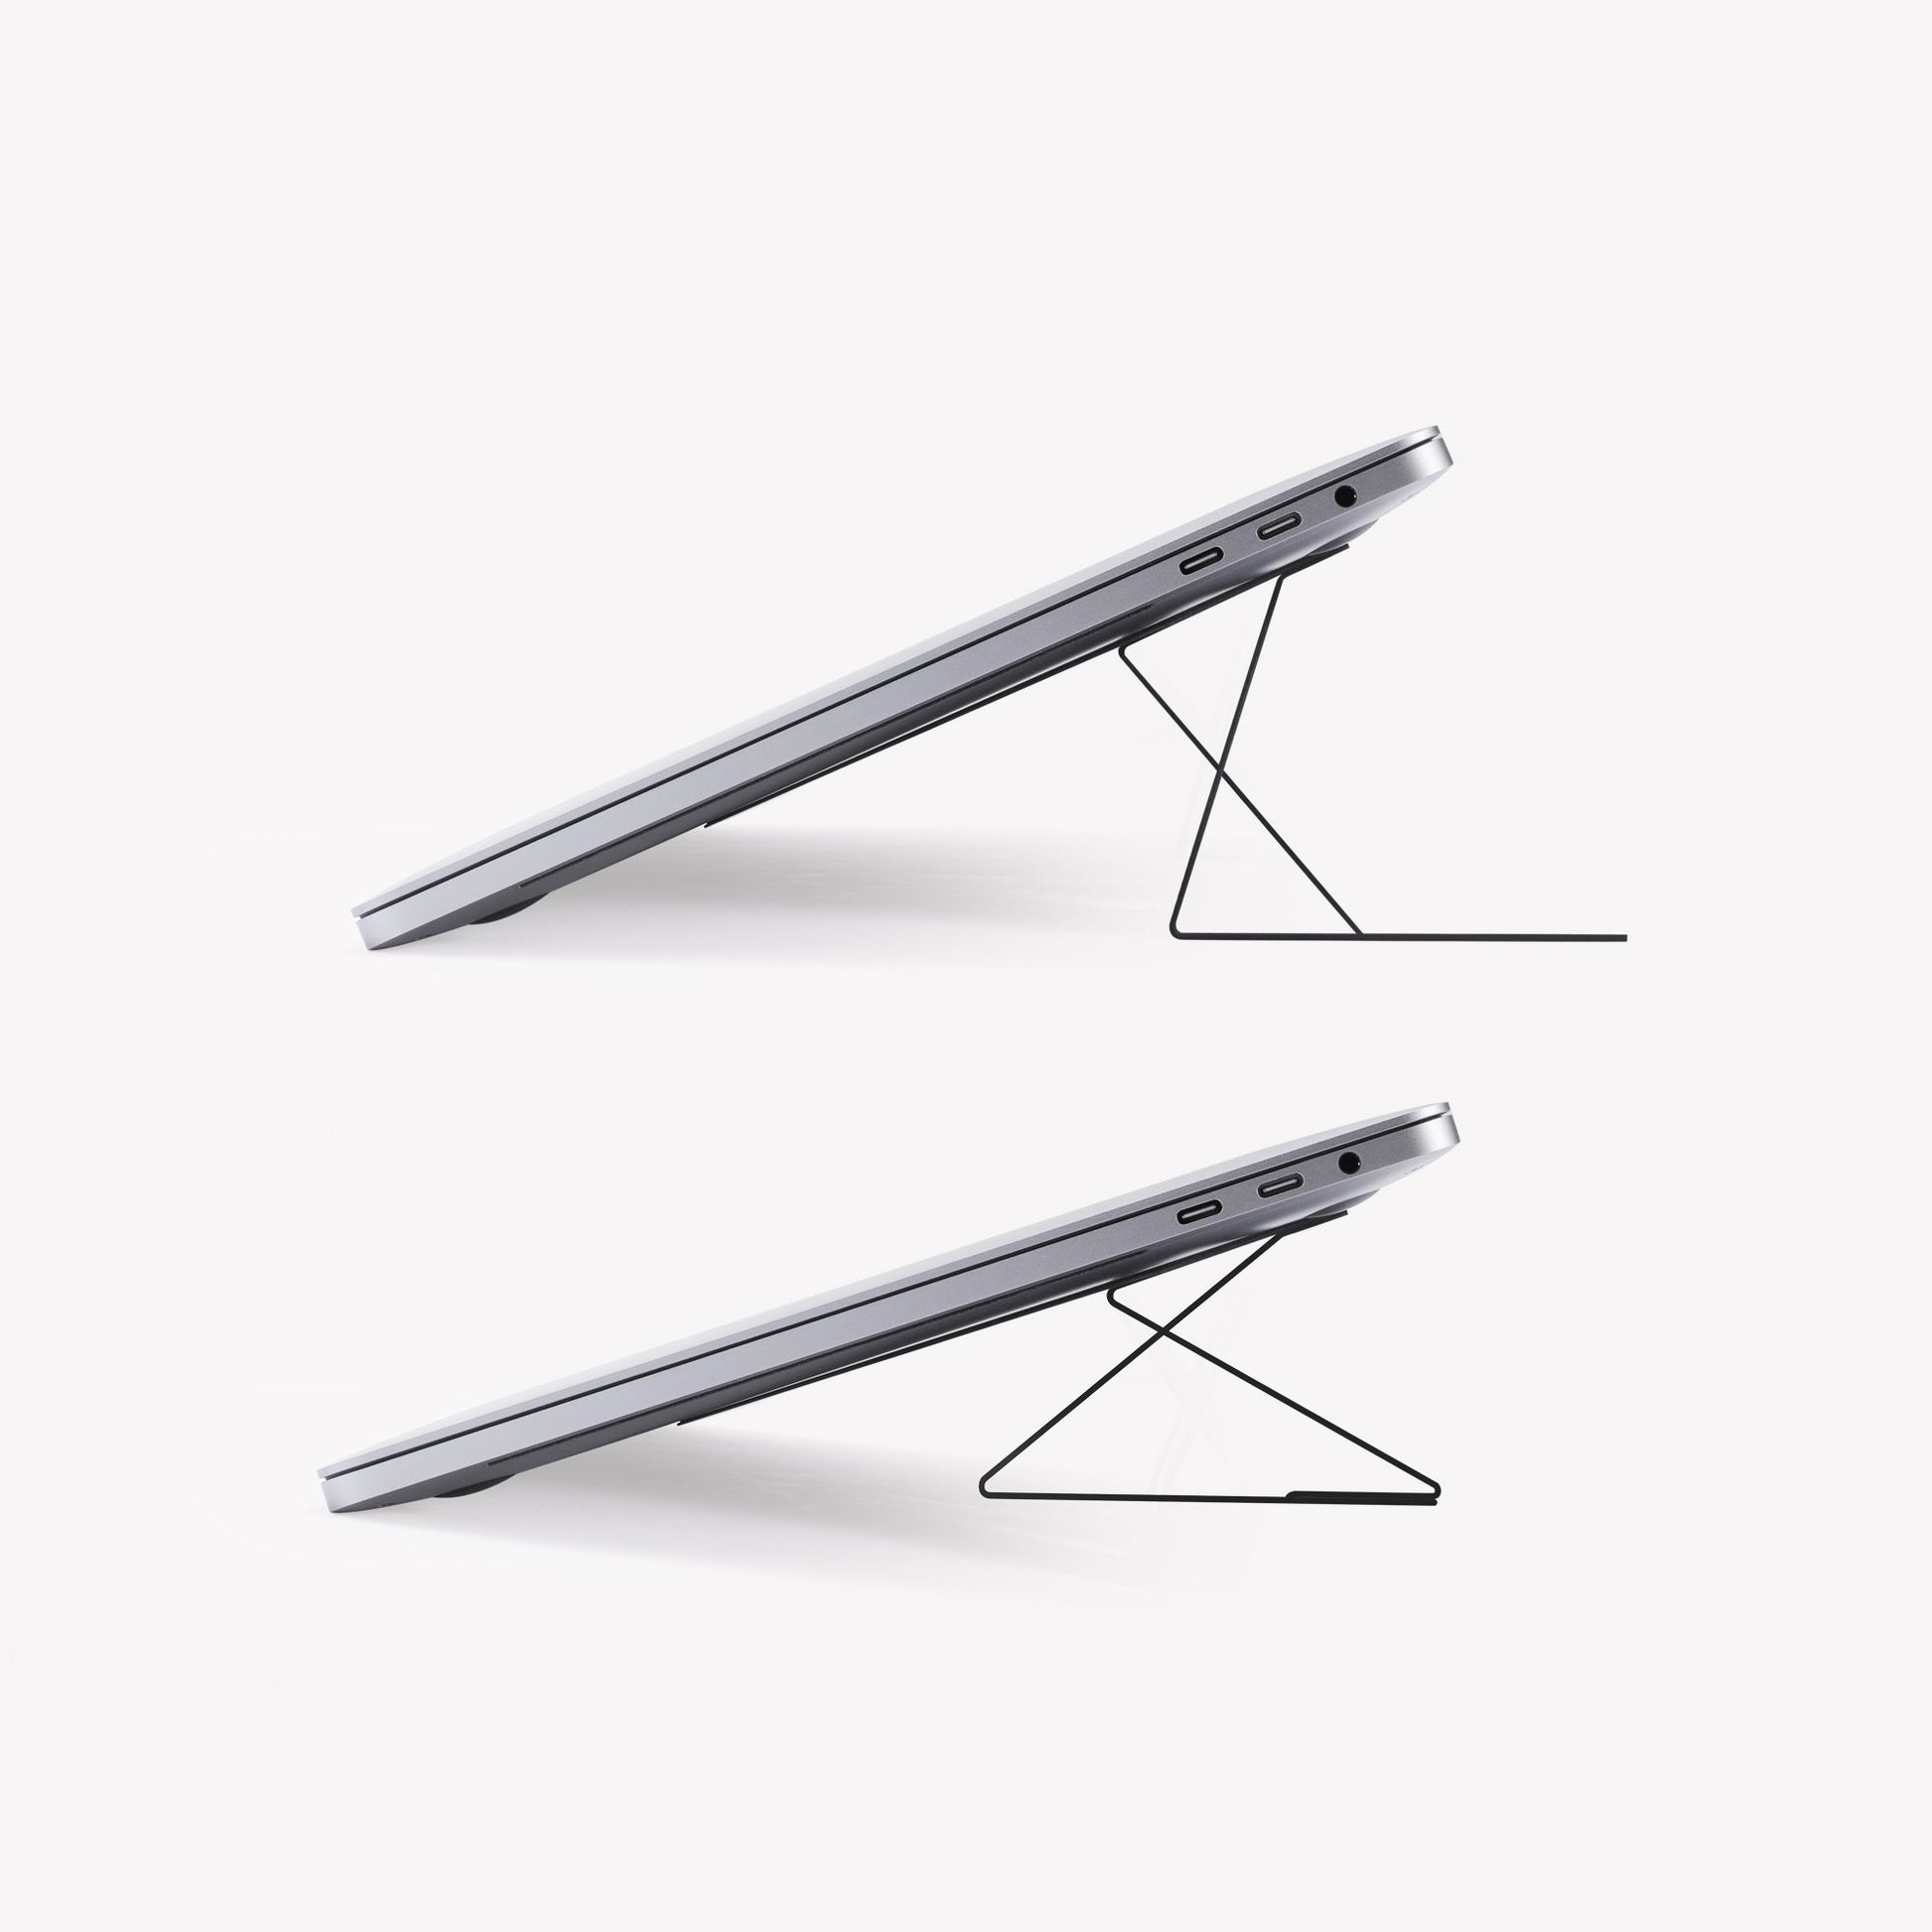 RACA Design - MOFT Laptop Stand – Raca Studyo